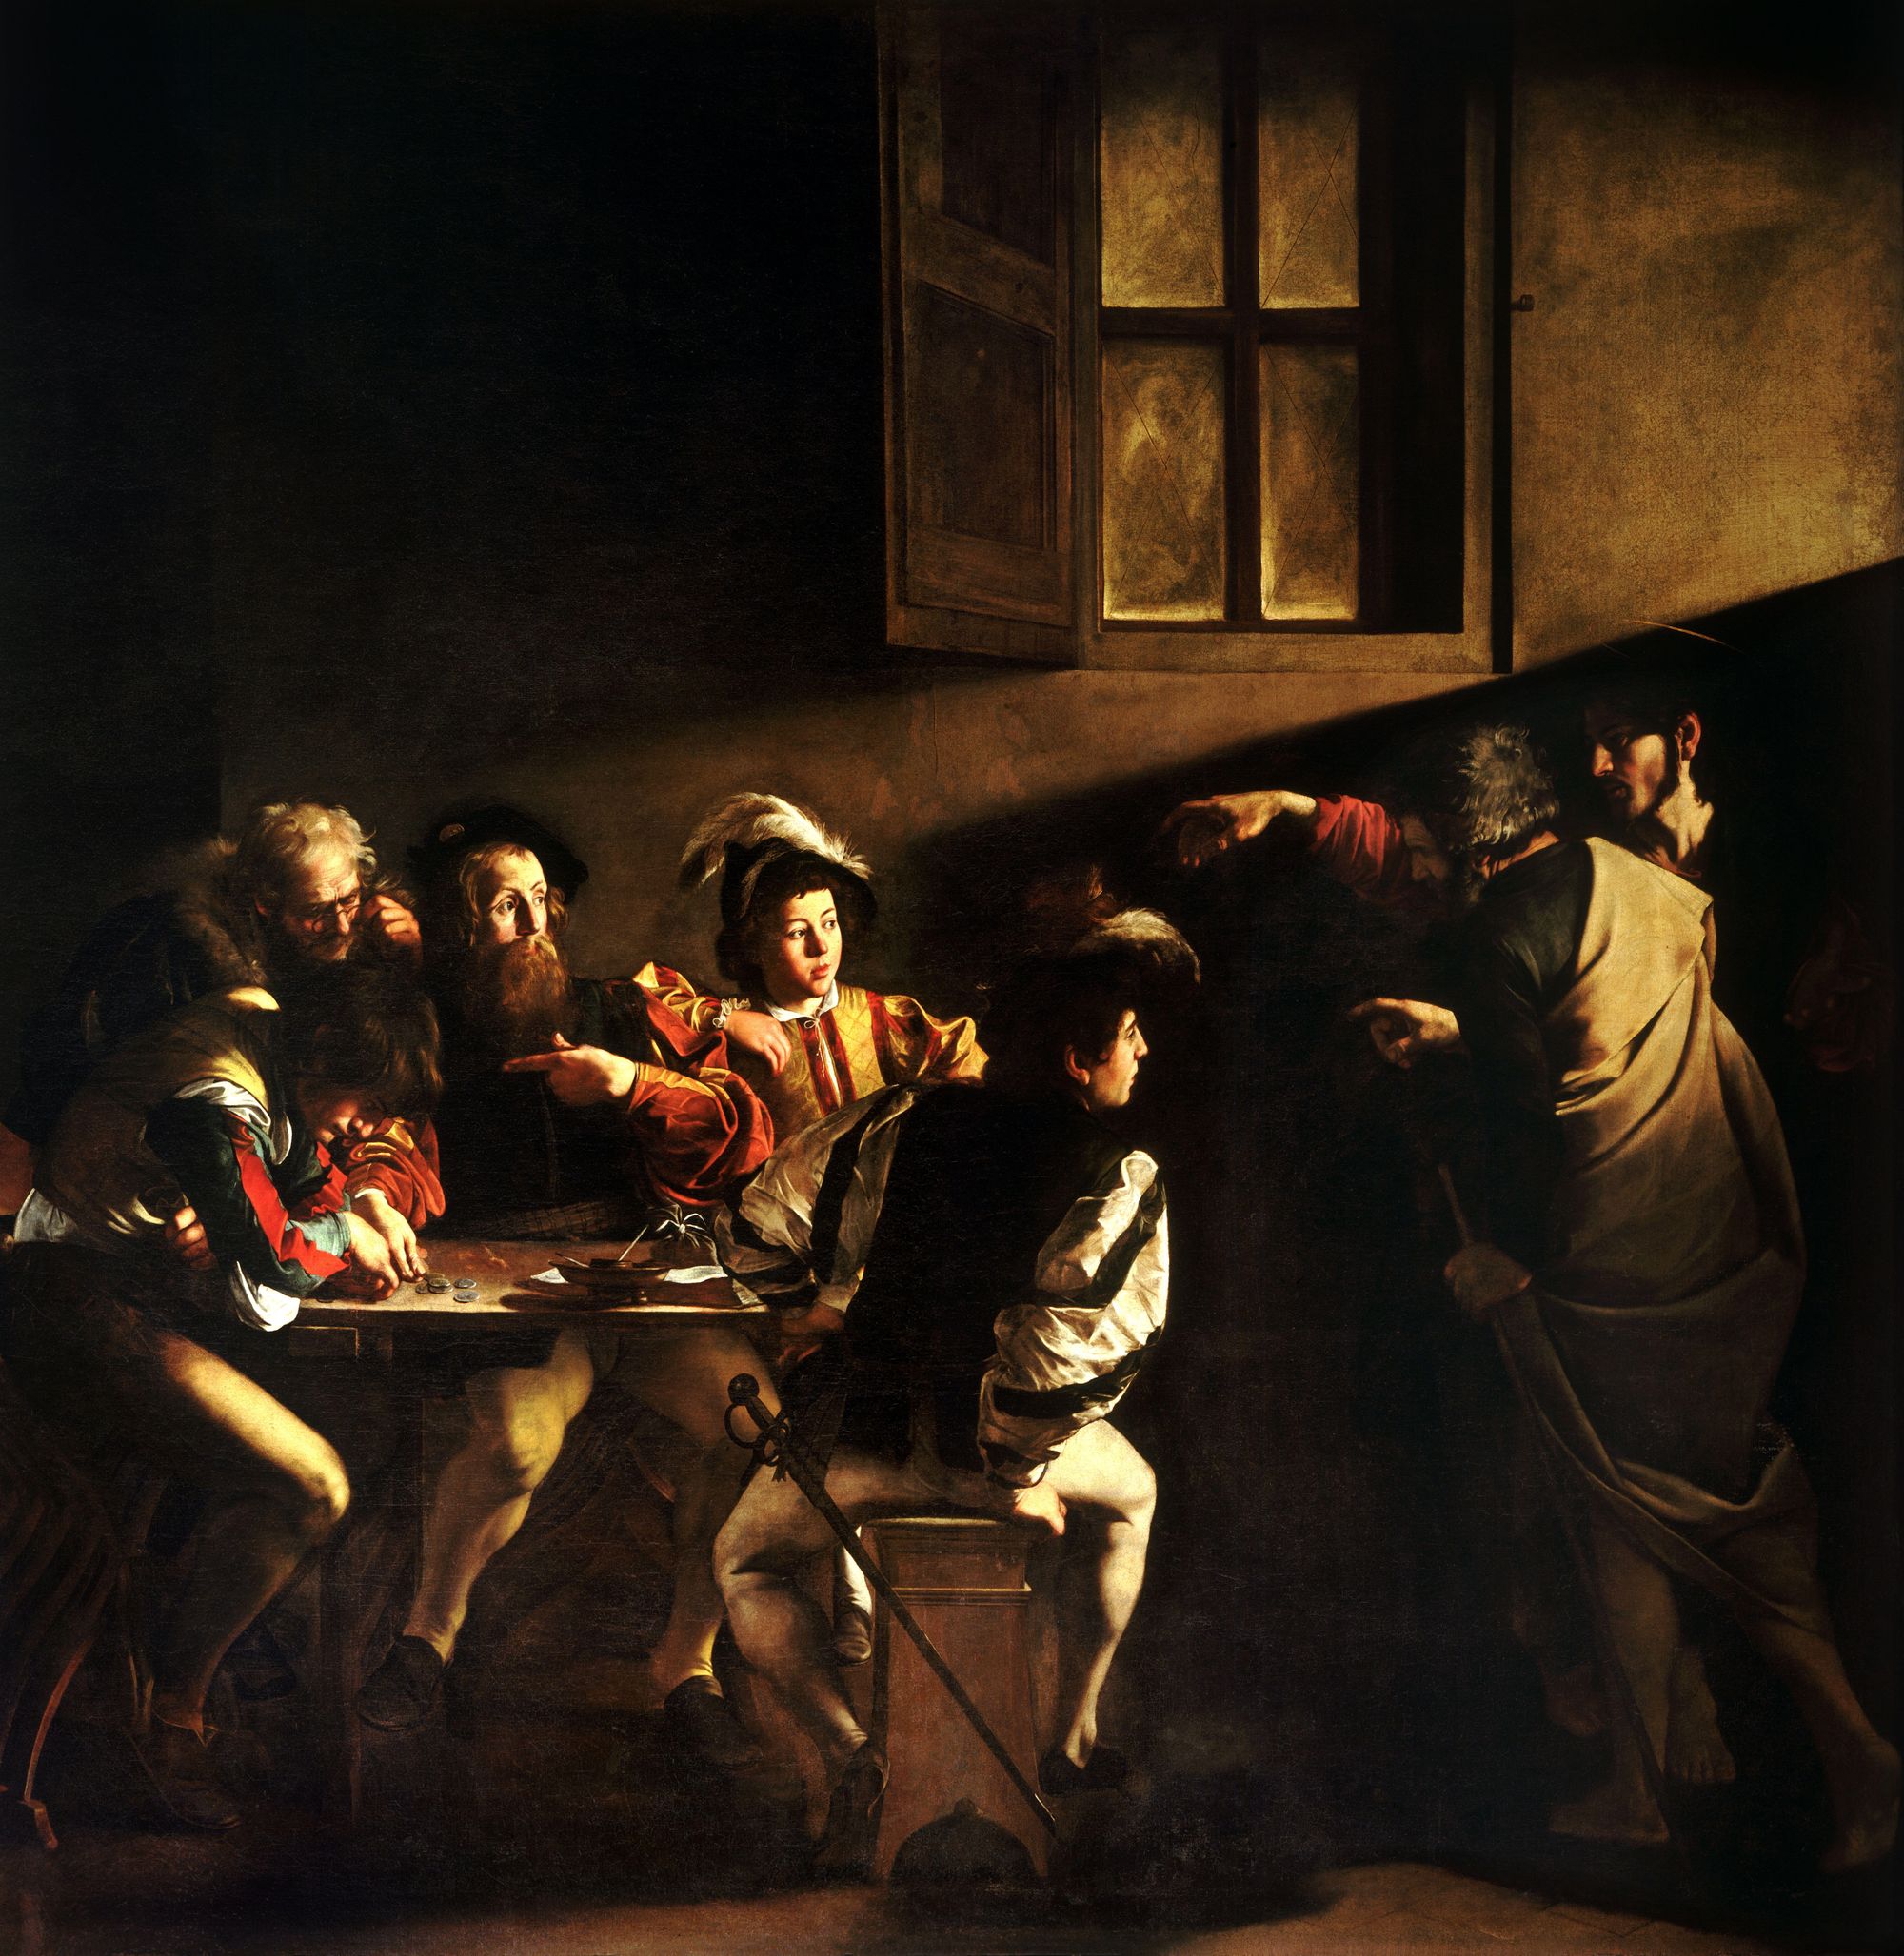 <p><strong>Calling of Saint Matthew</strong></p><p>Caravaggio</p><p>Baroque</p><p>1599-1600</p><p>Oil on canvas</p>